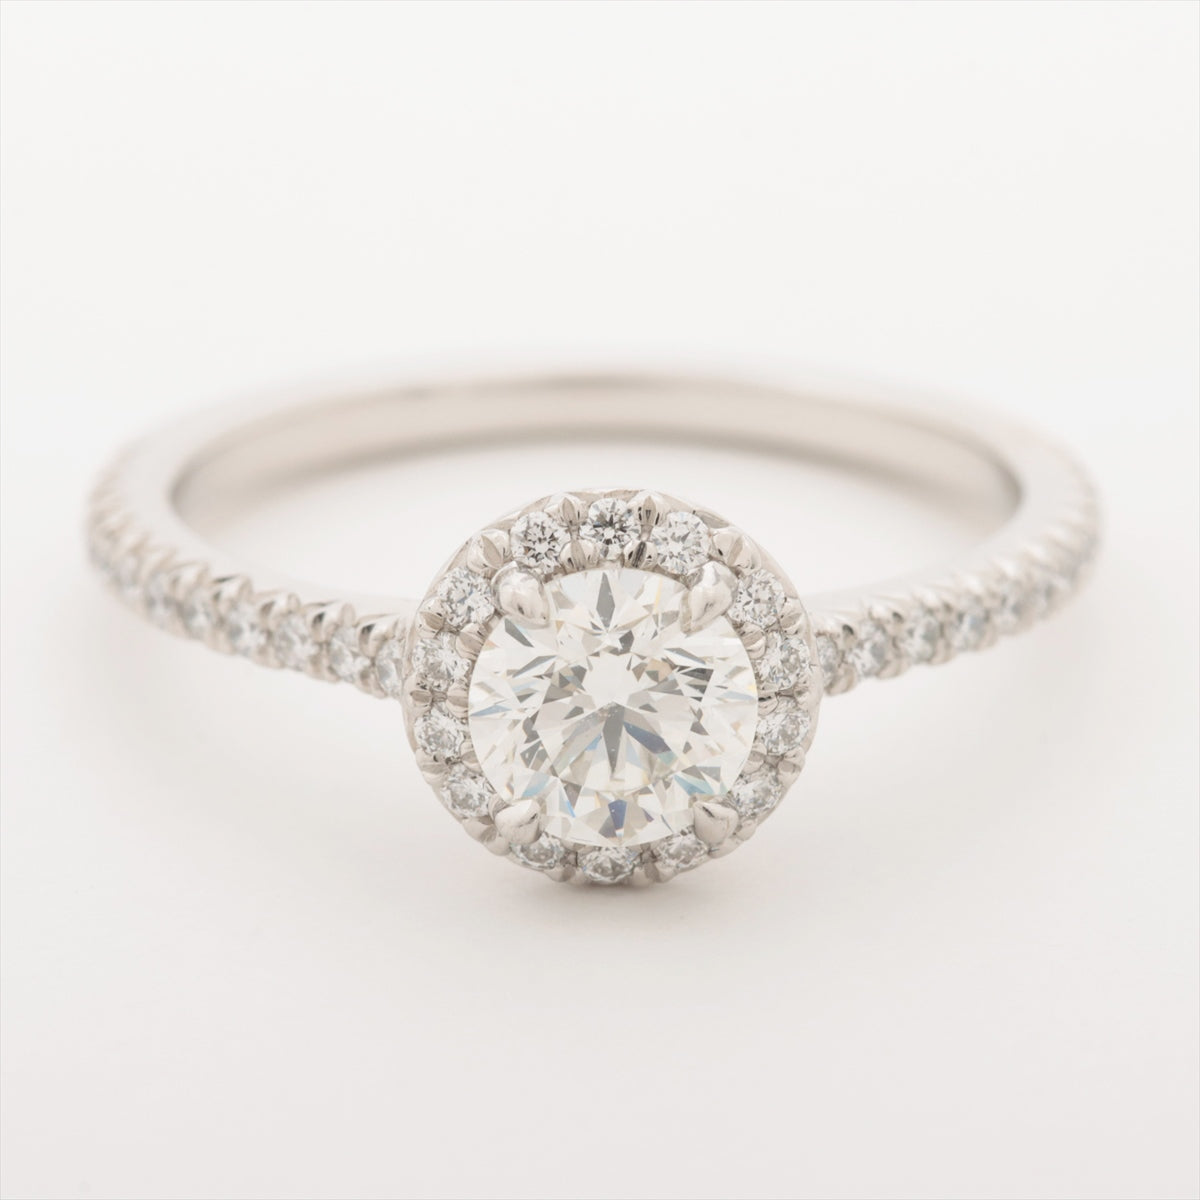 Tiffany Soleste diamond rings Pt950 2.9g D0.47 I VS1 3EX NONE